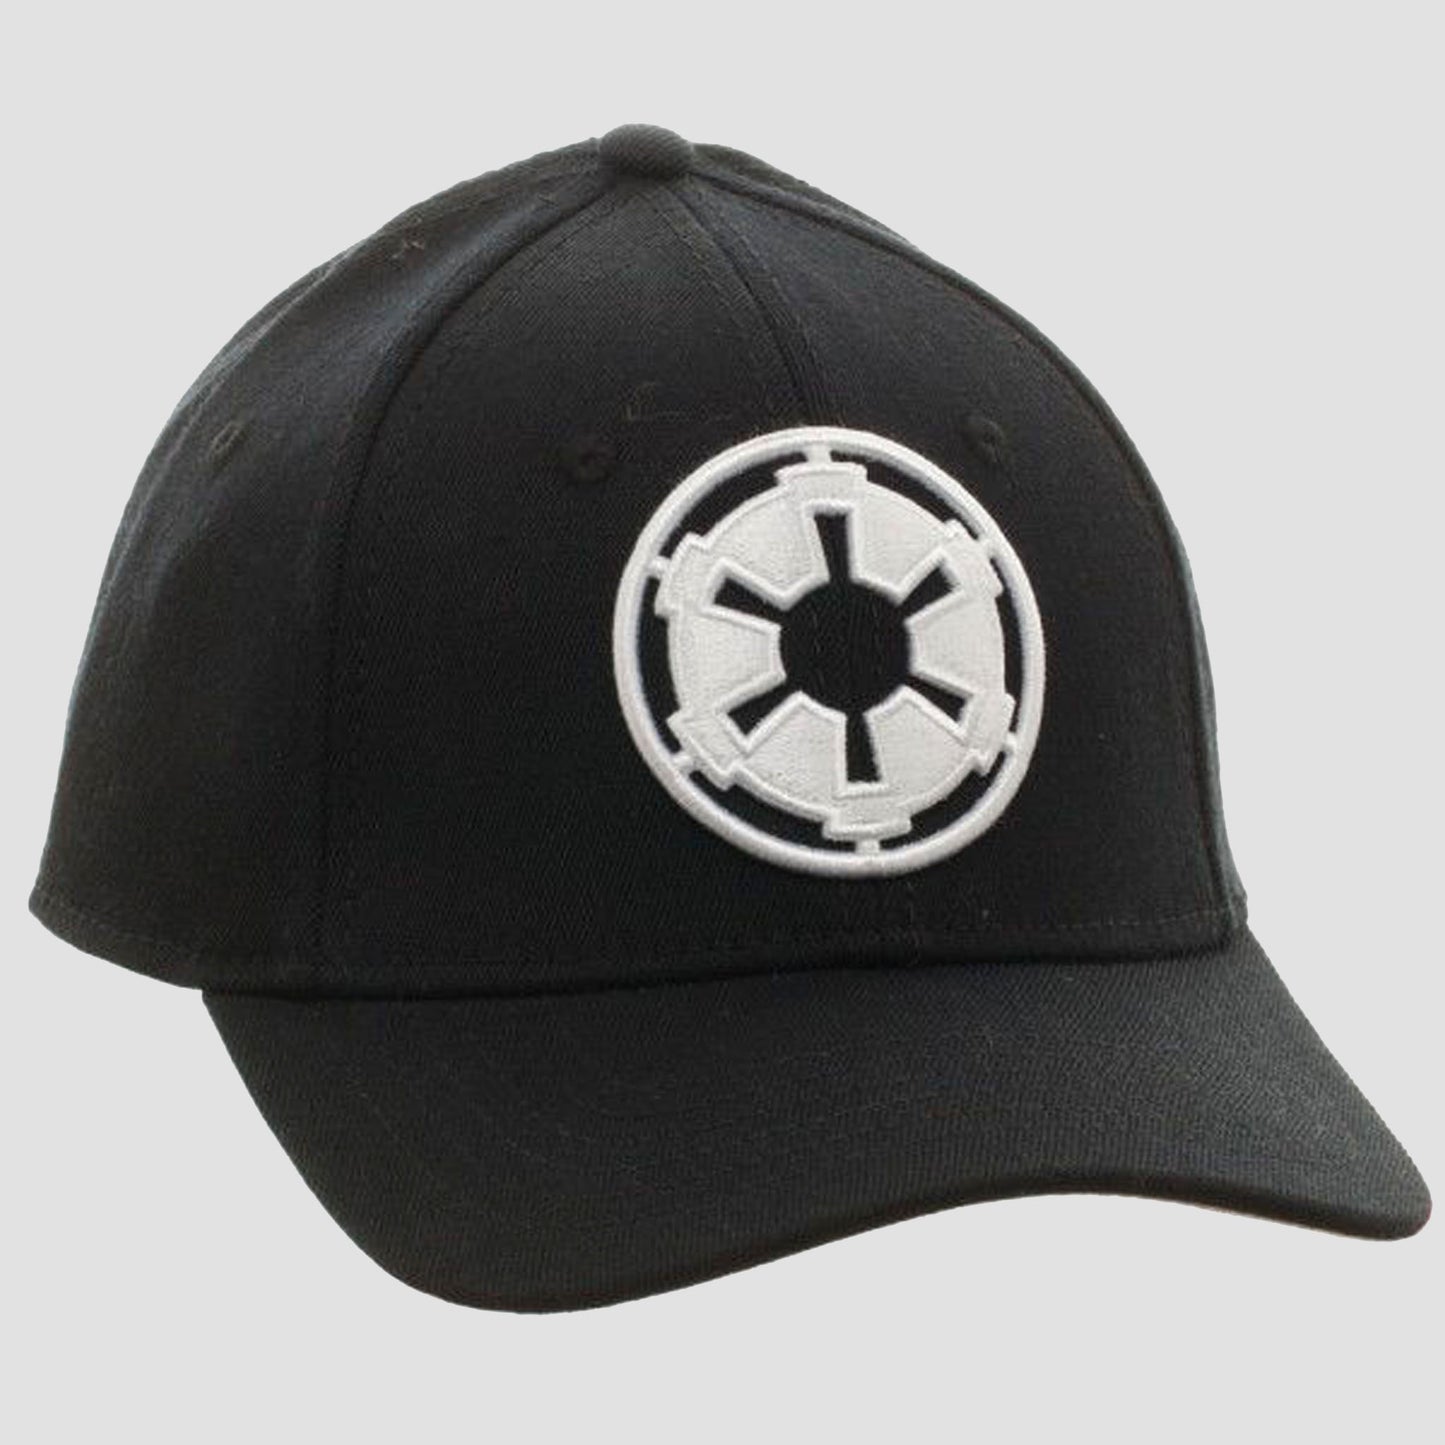 Imperial Logo (Star Wars) Flex Hat